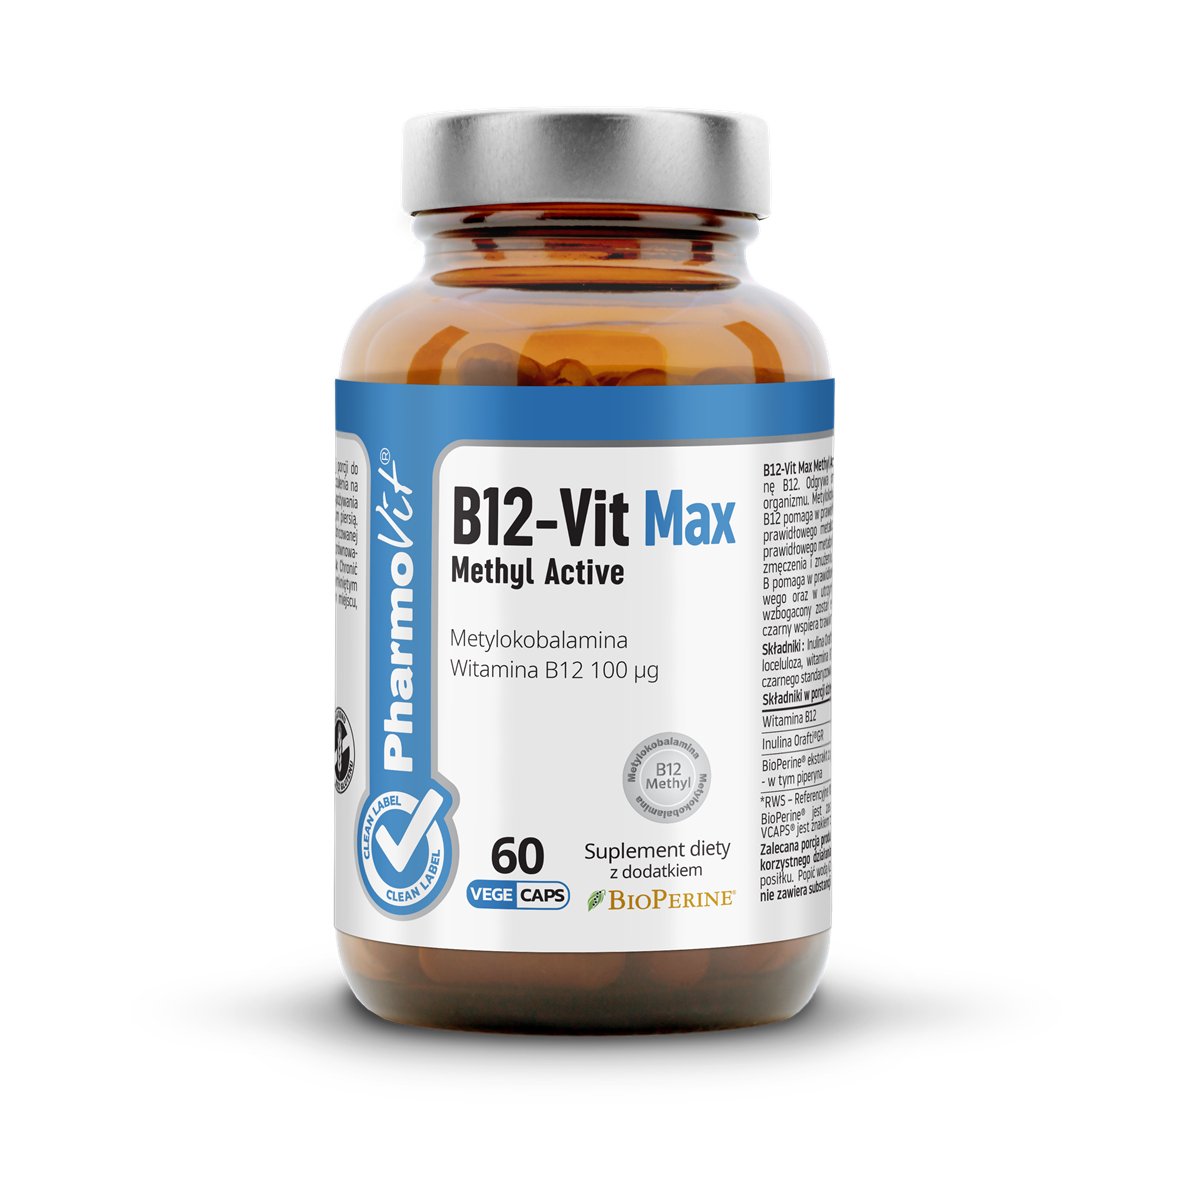 B12-Vit Max Methyl Active